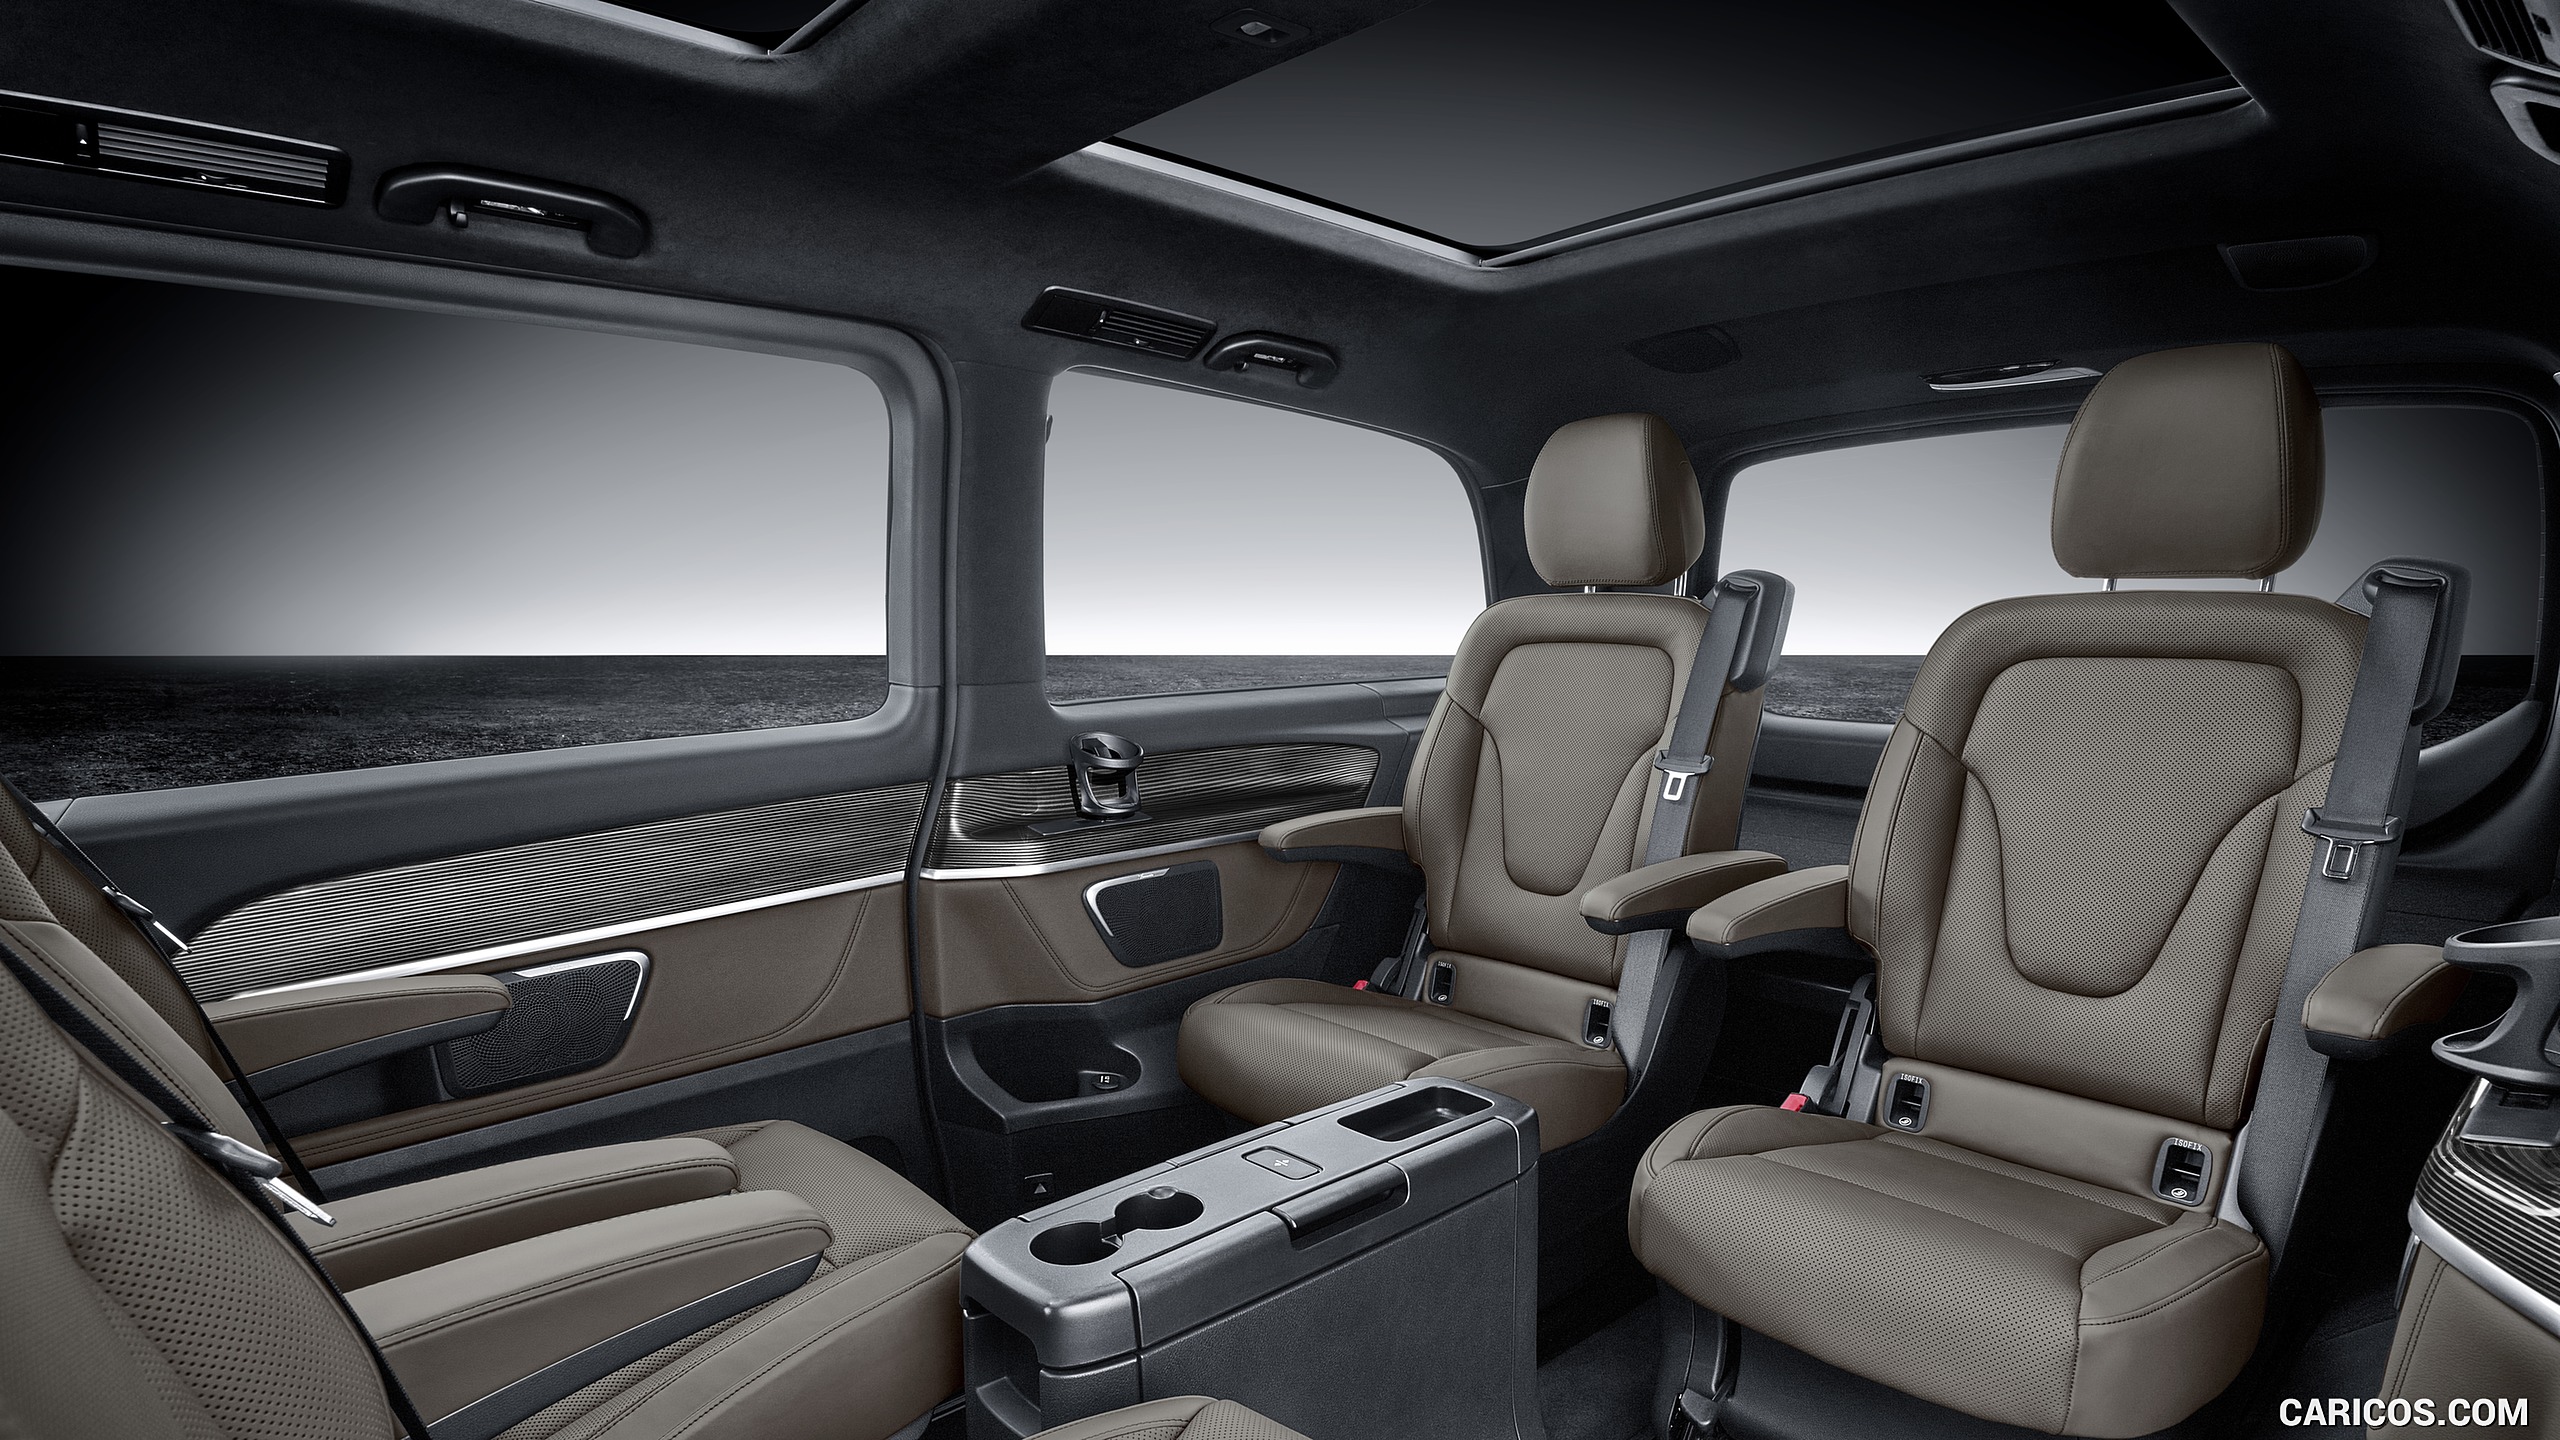 2019 Mercedes-Benz V-Class EXCLUSIVE Line - Interior, Seats, #75 of 216